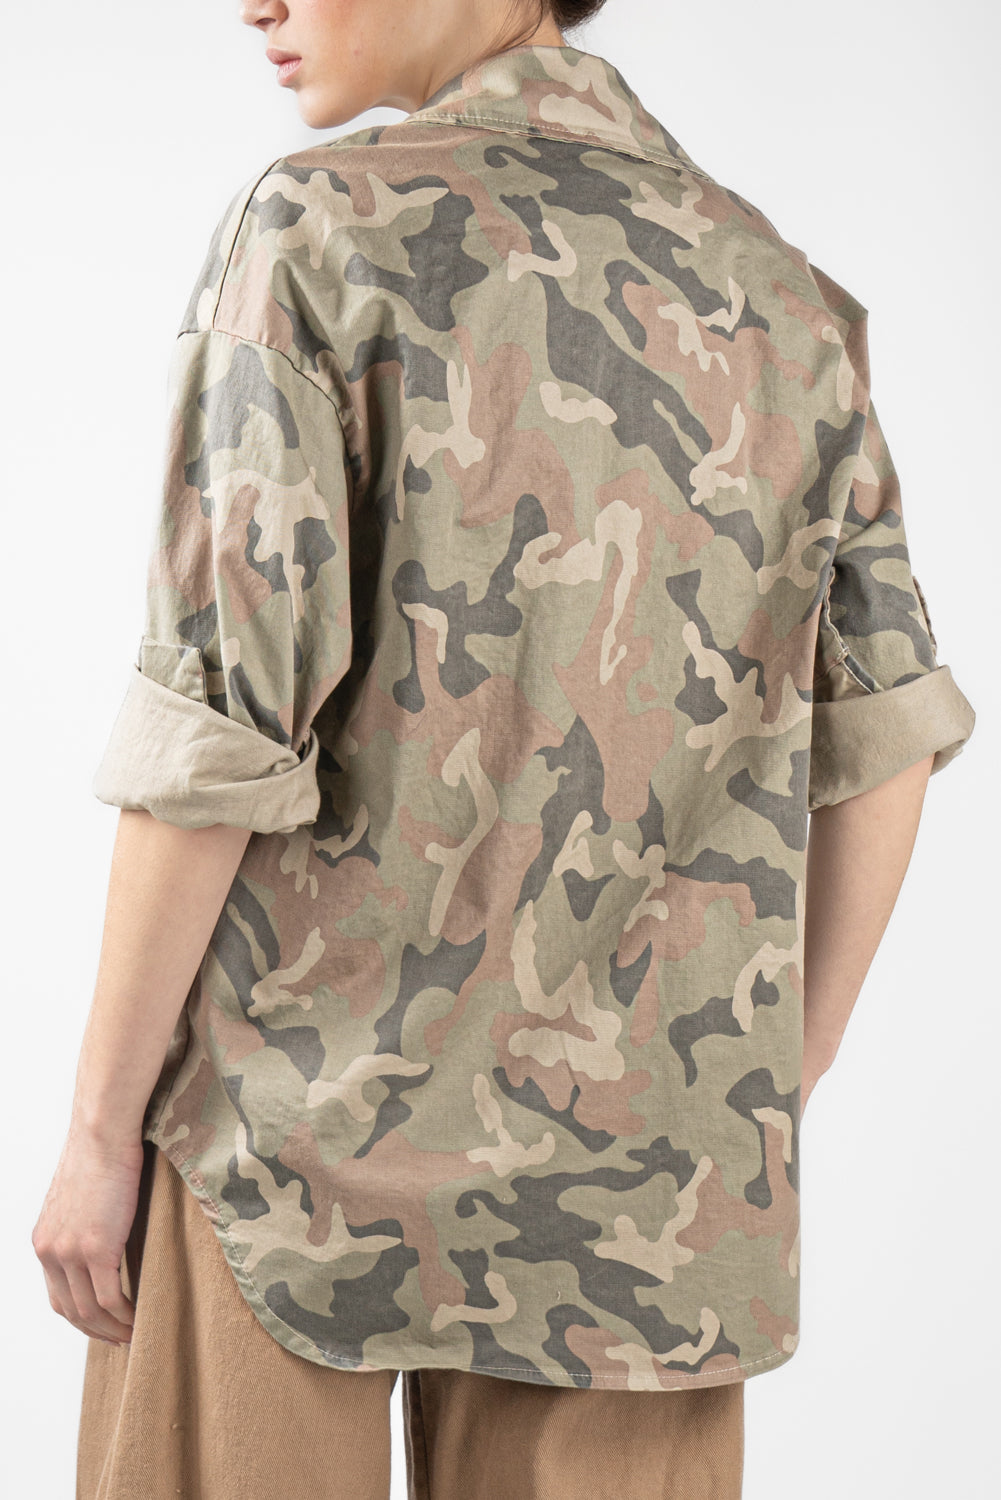 Giacca camicia in fantasia camouflage